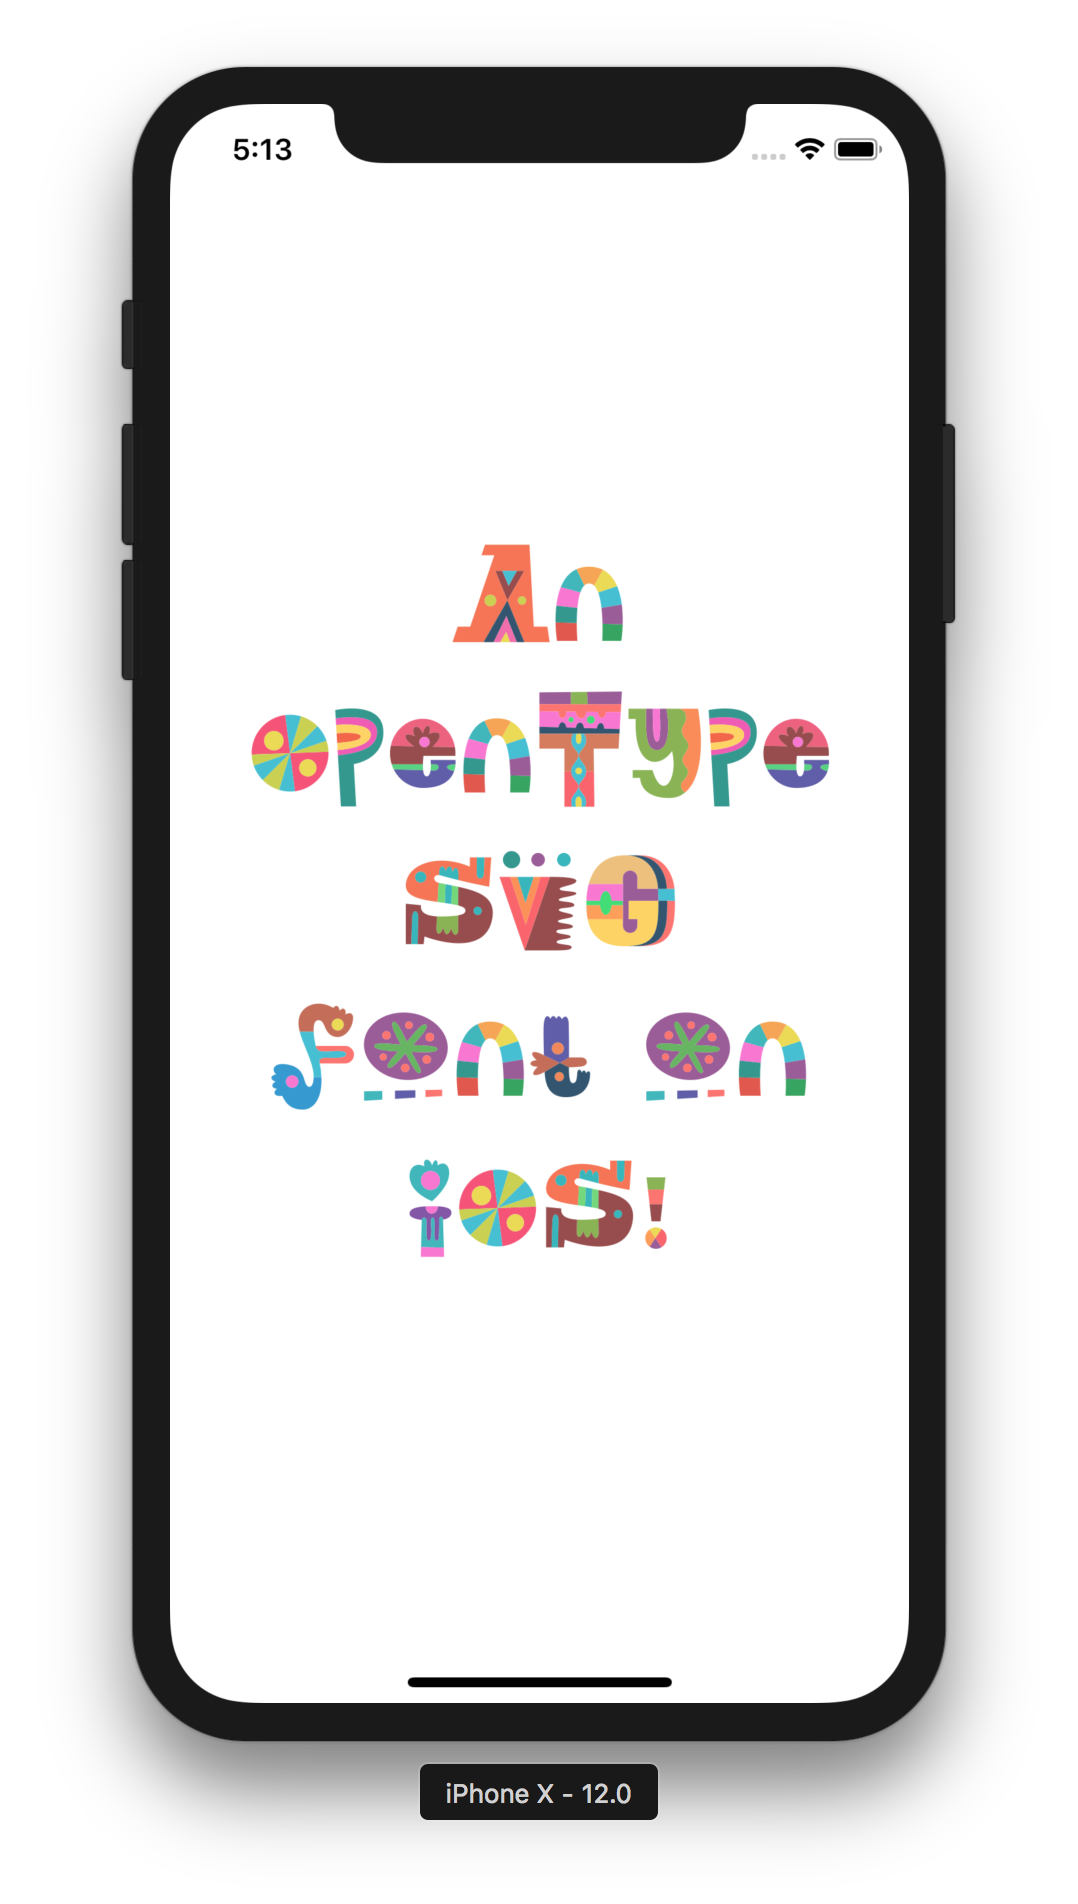 Playbox font on iOS 12